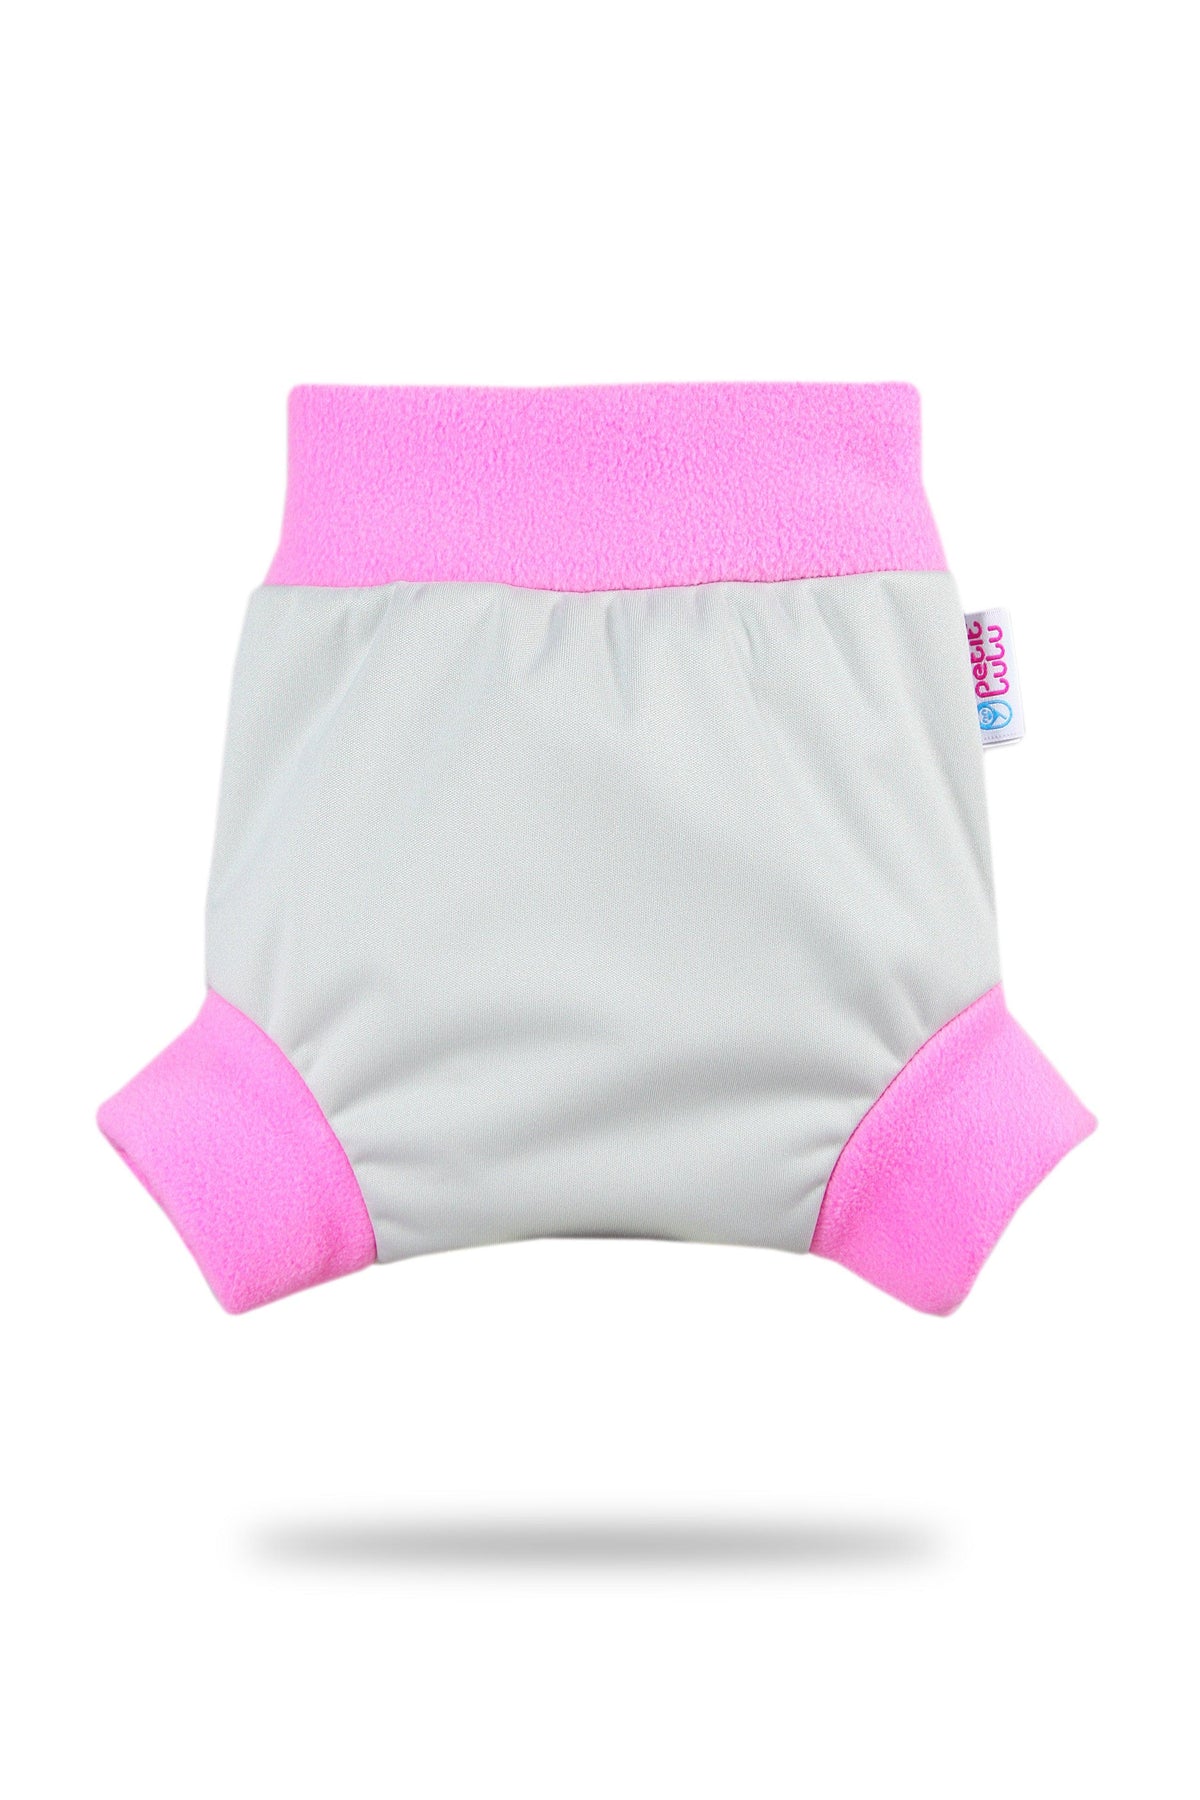 Petit Lulu | Couvre-couche Pull-Up | Gray (pink) (LIQUIDATION VENTE FINALE) - Petit Lulu